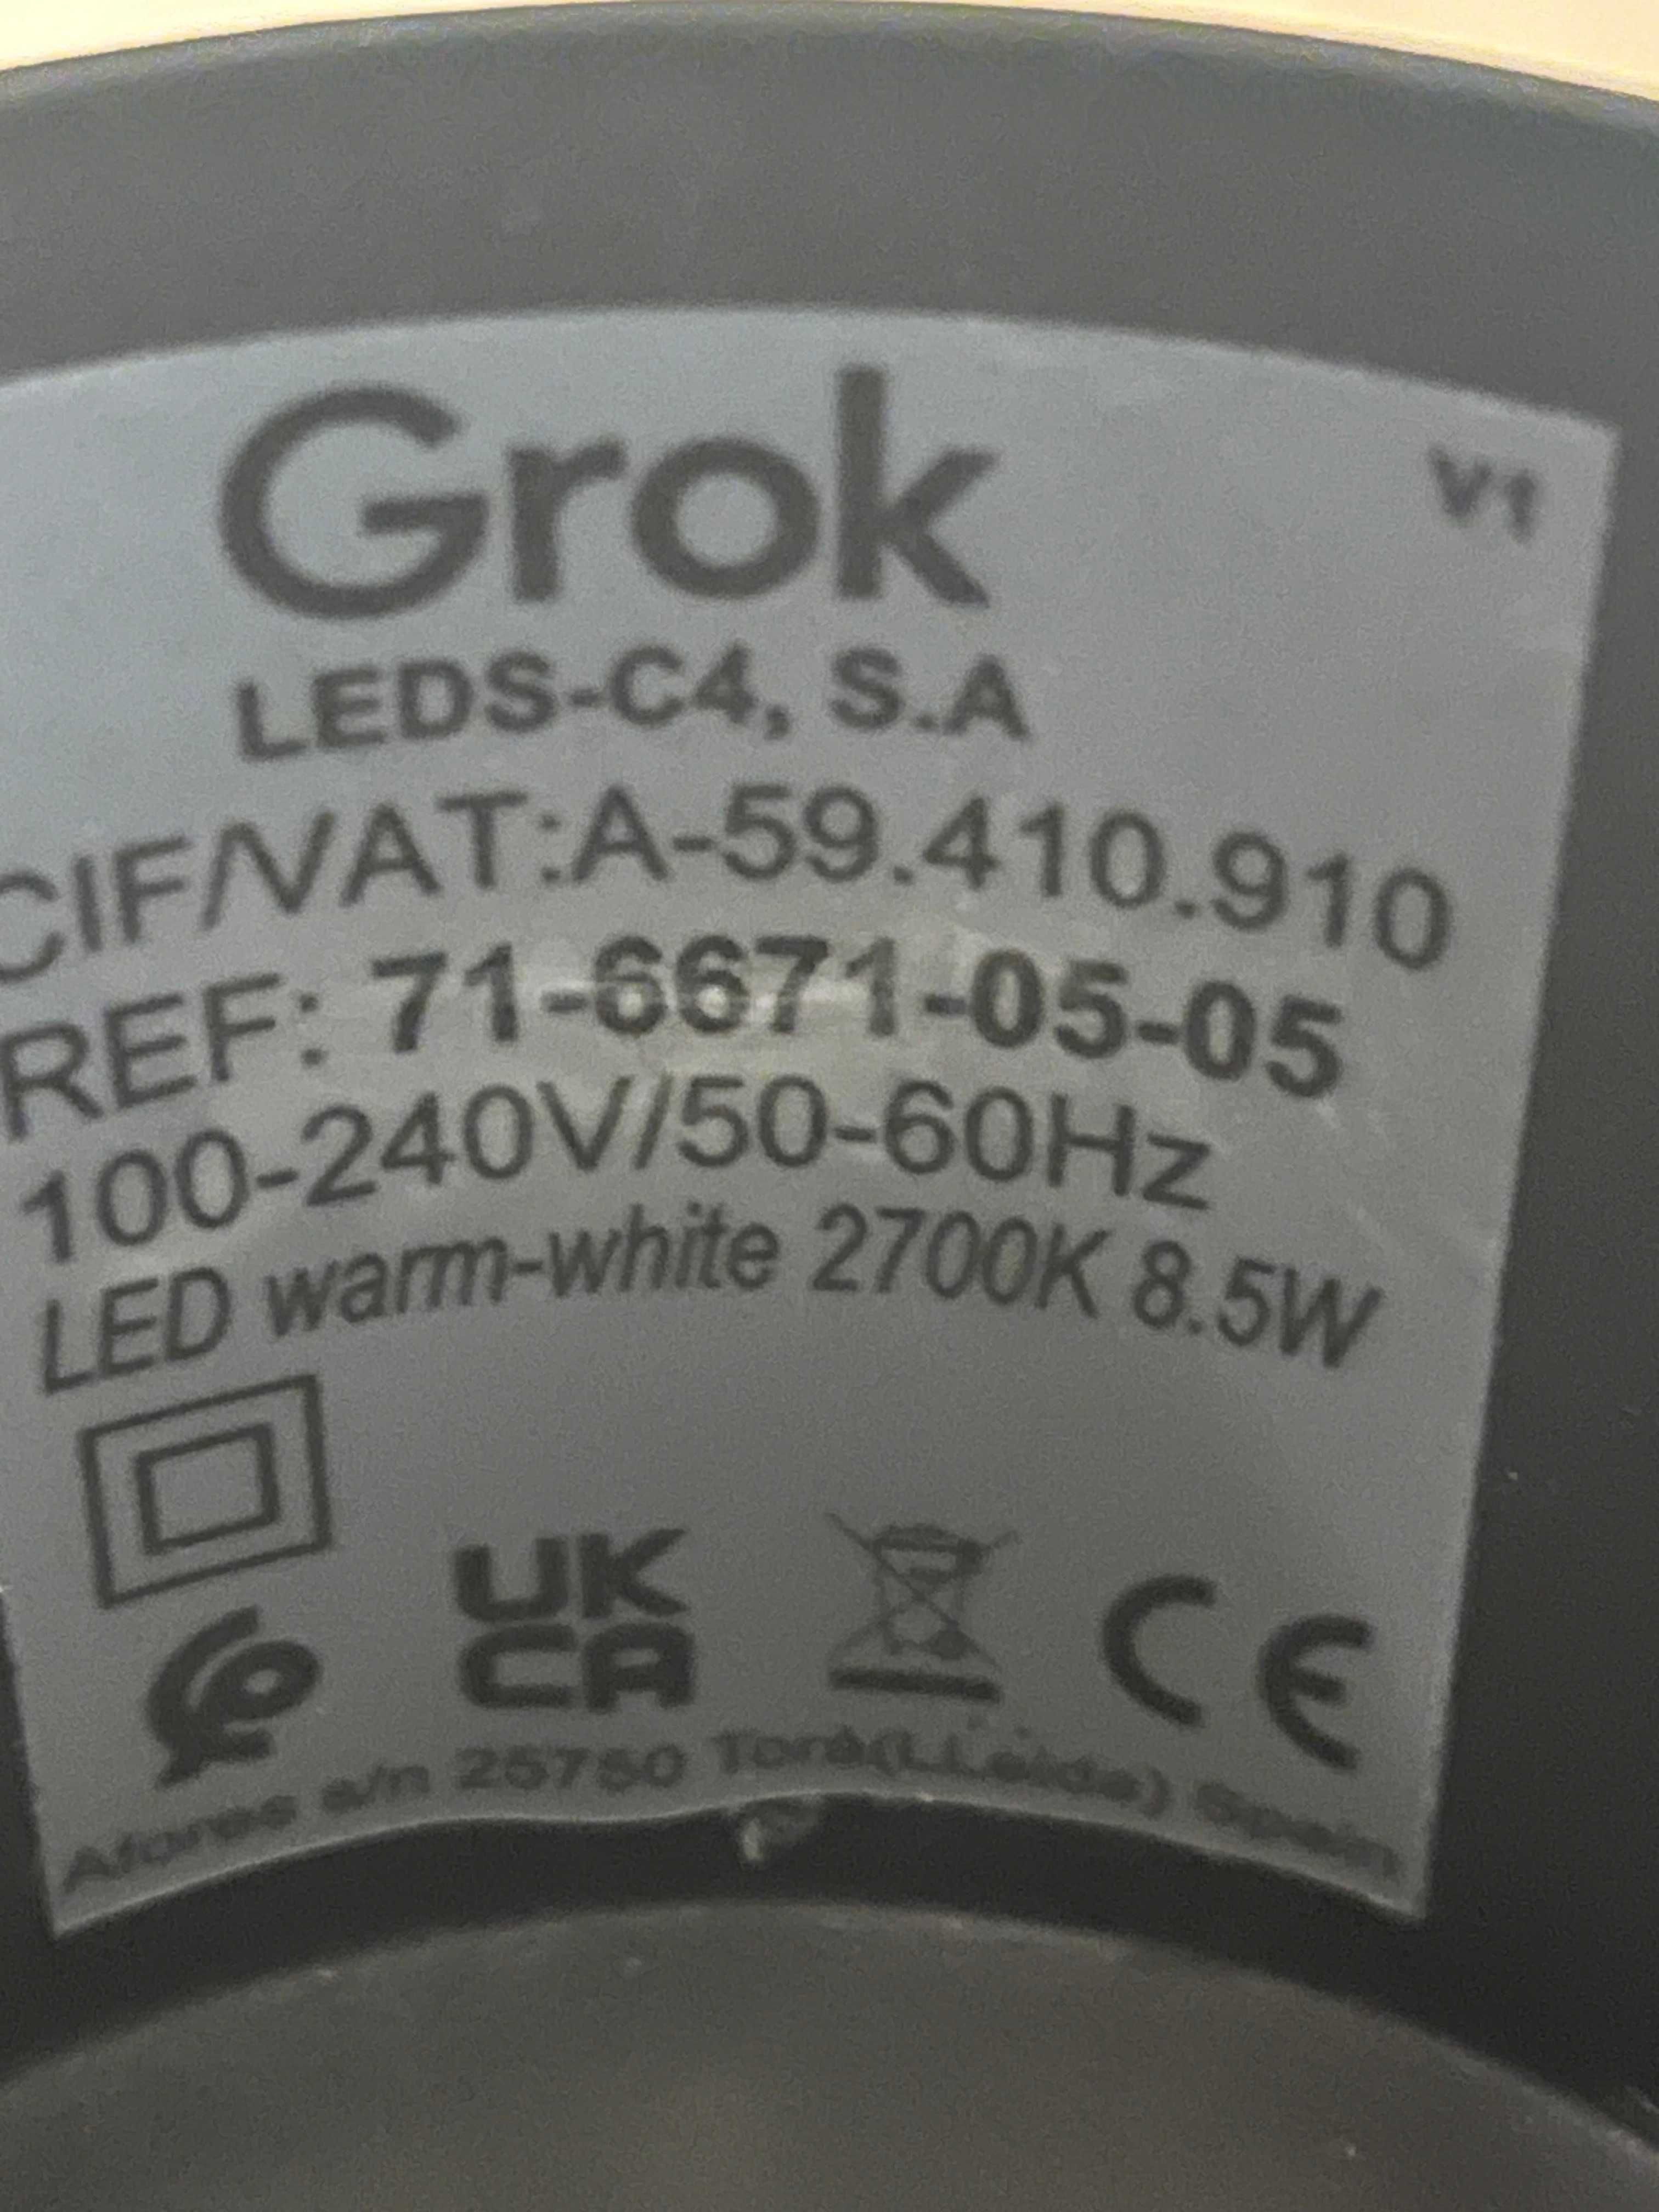 Lampa sufitowa Grok LEDS-C4, S.A